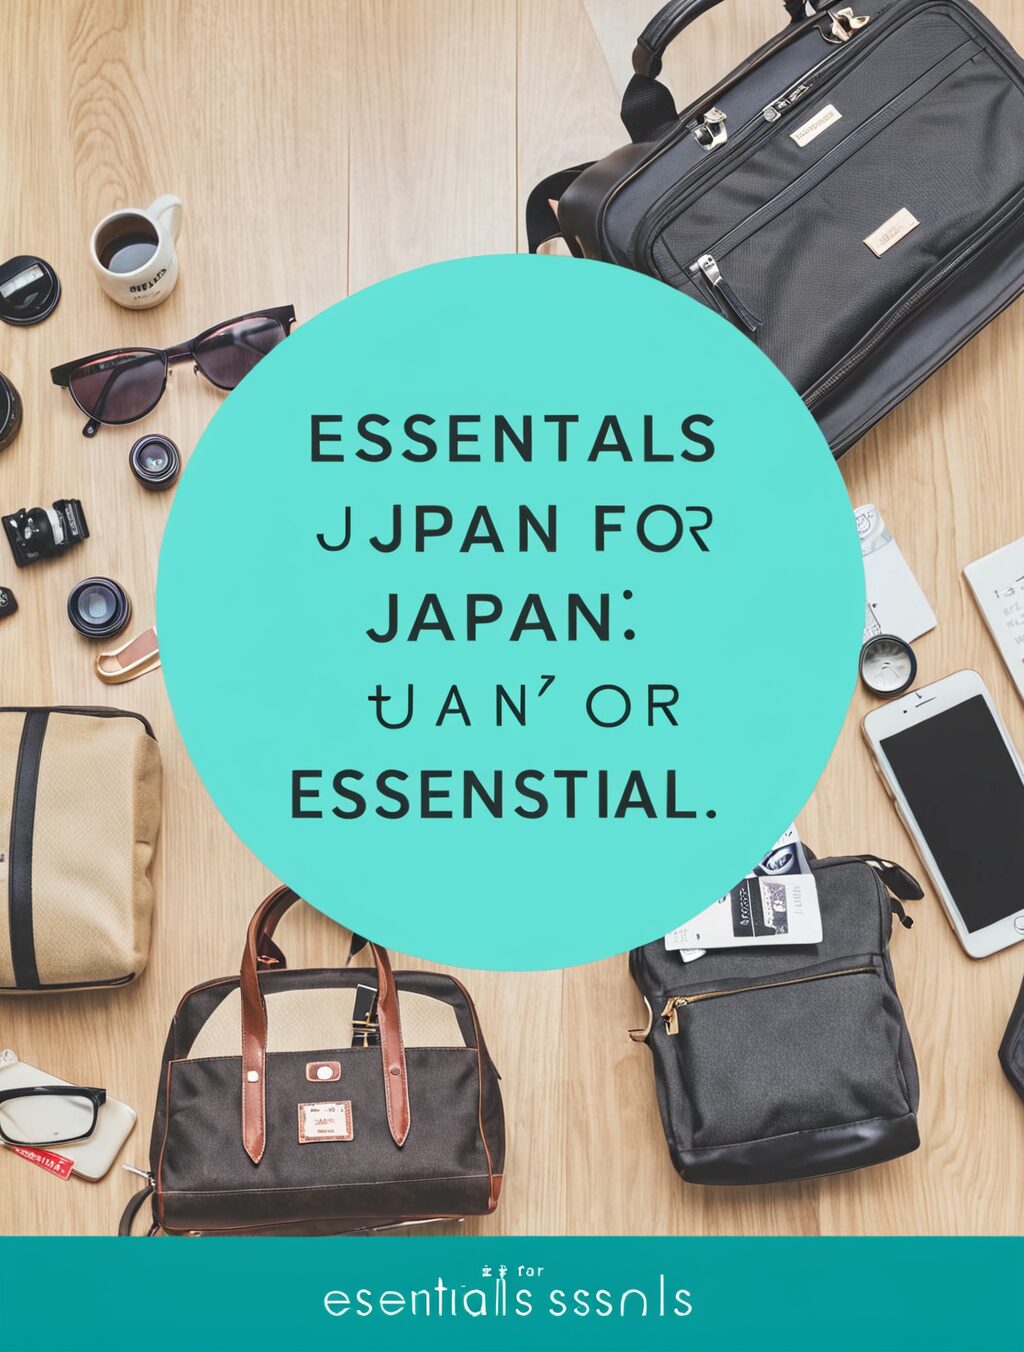 essentials for japan trip